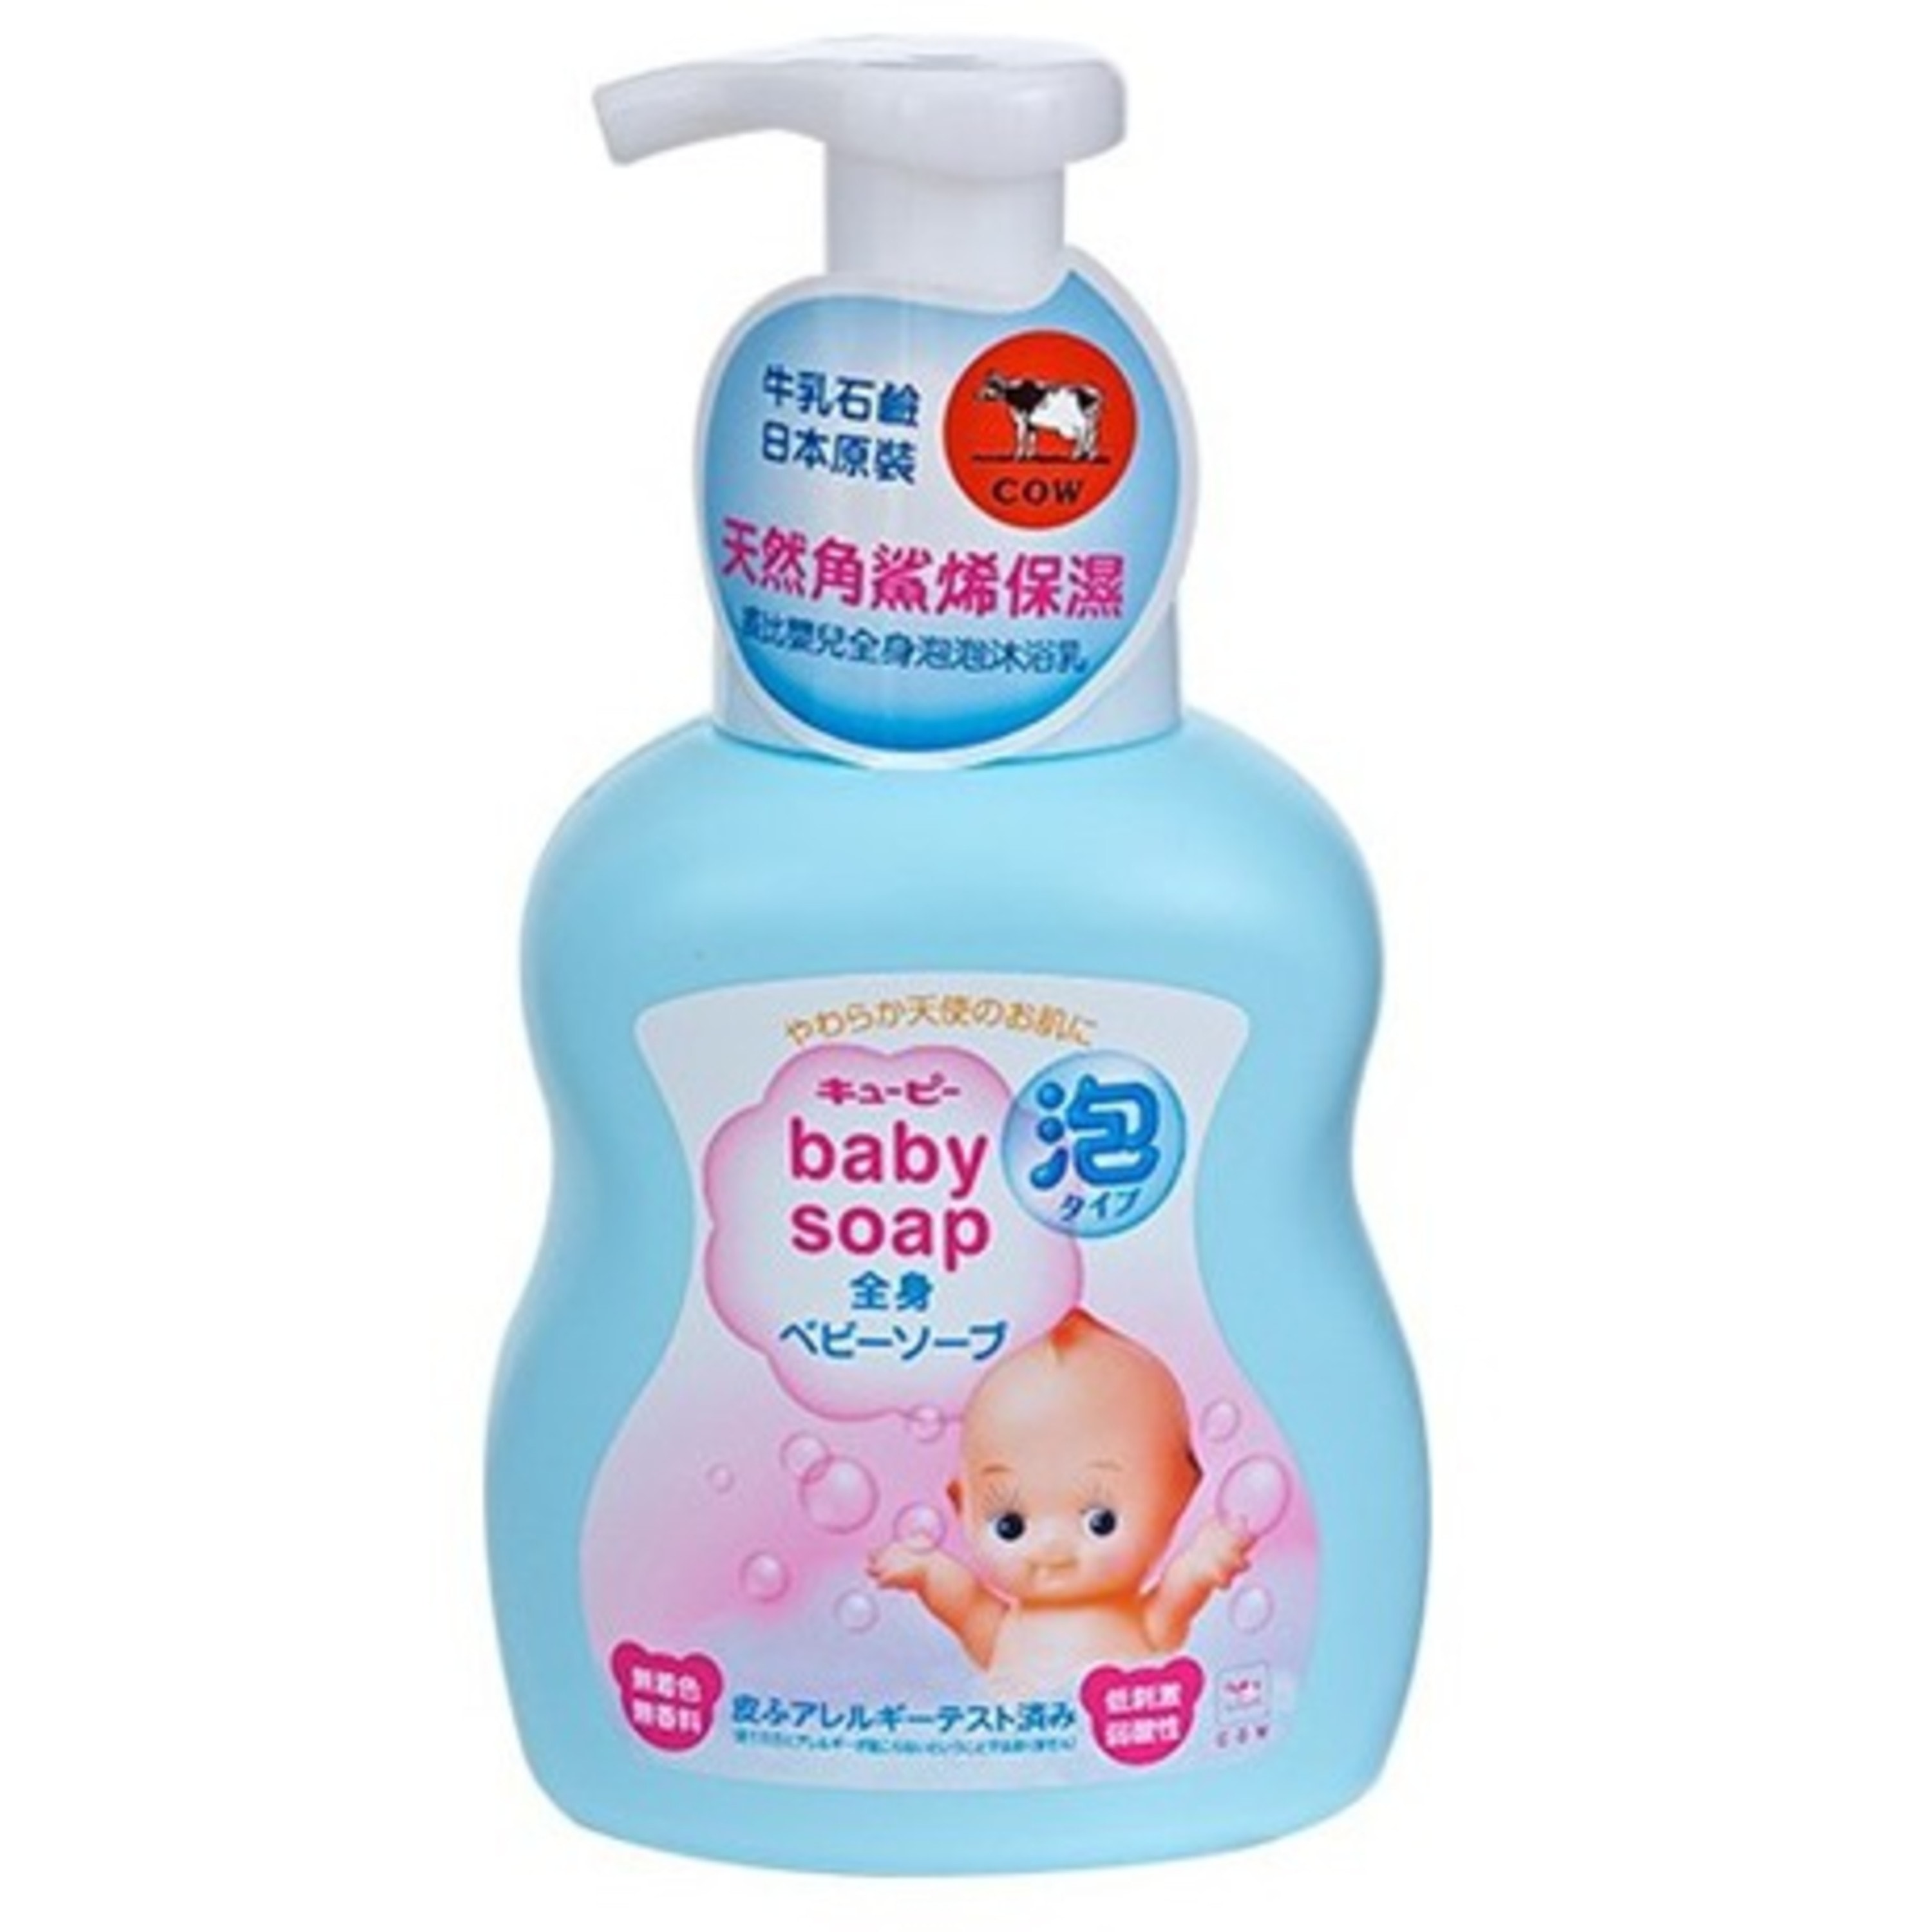 Мыло для купания. Cow brand Kewpie мыло детское. Cow brand Kewpie жидкое мыло-пенка увлажняющее. Kewpie Baby body Soap Foam Type with Pump 400ml. Детское мыло пенка.